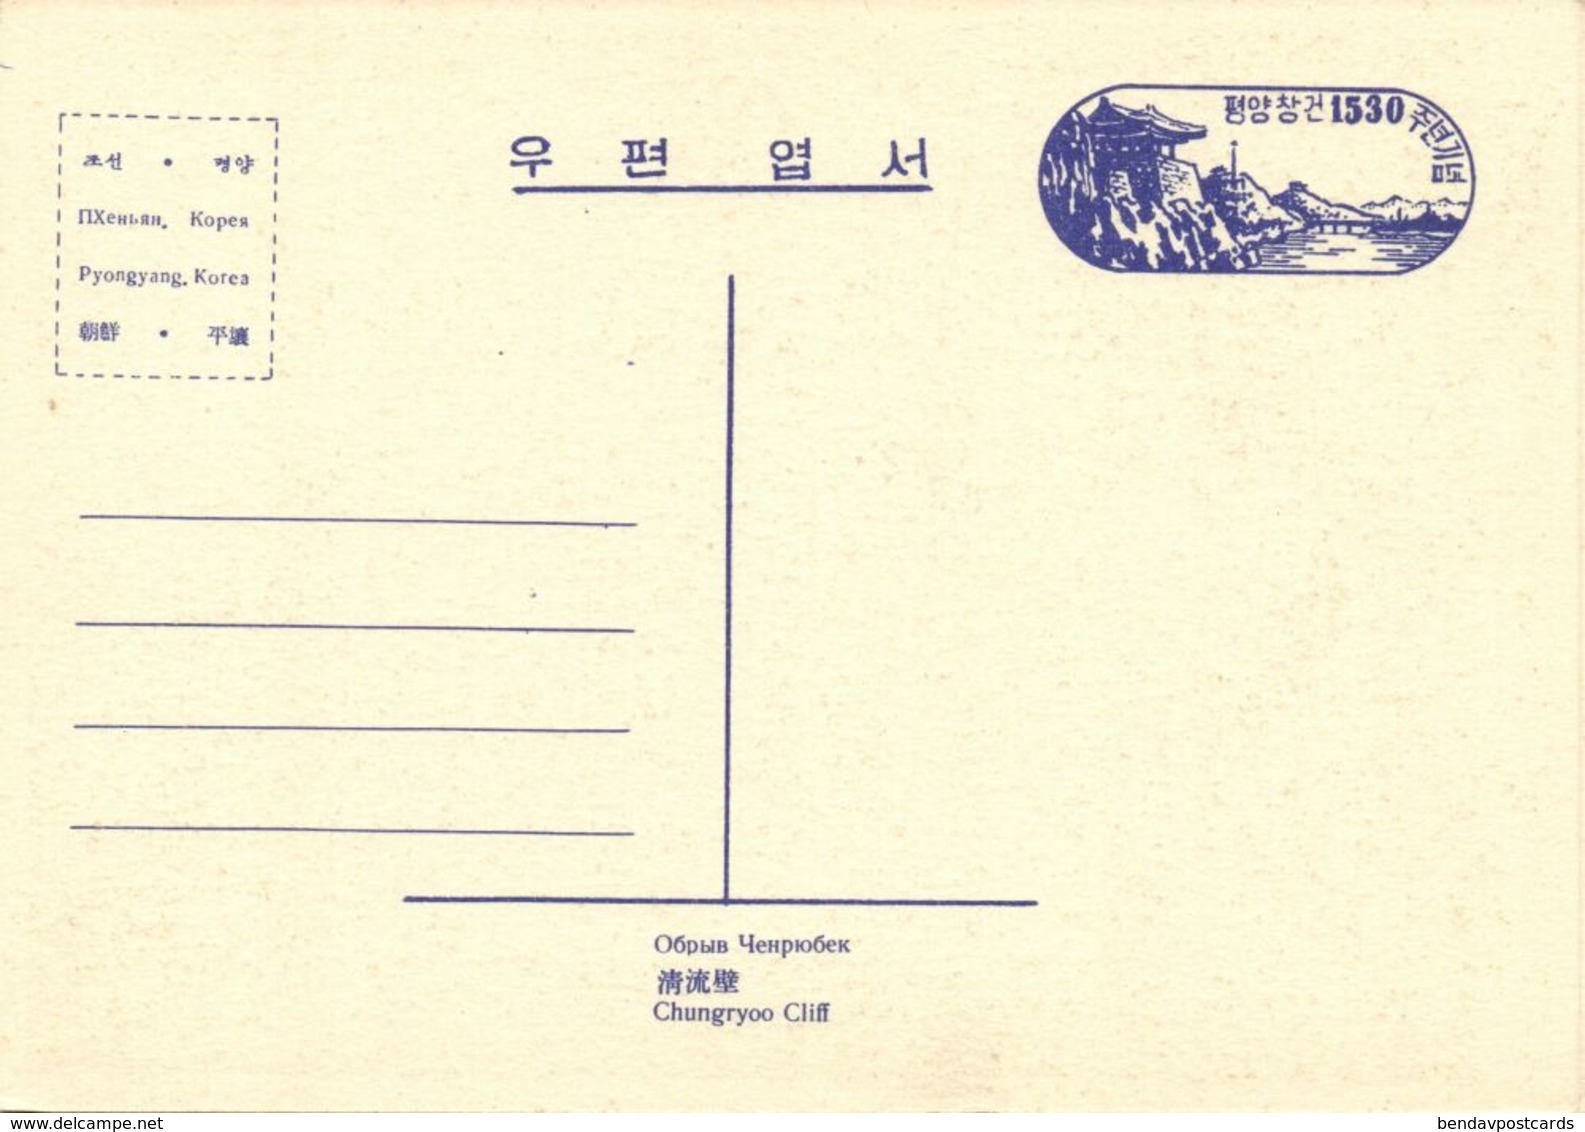 North Korea Coree, PYONGYANG, Chungryoo Cliff (1950s) Postcard - Corea Del Norte